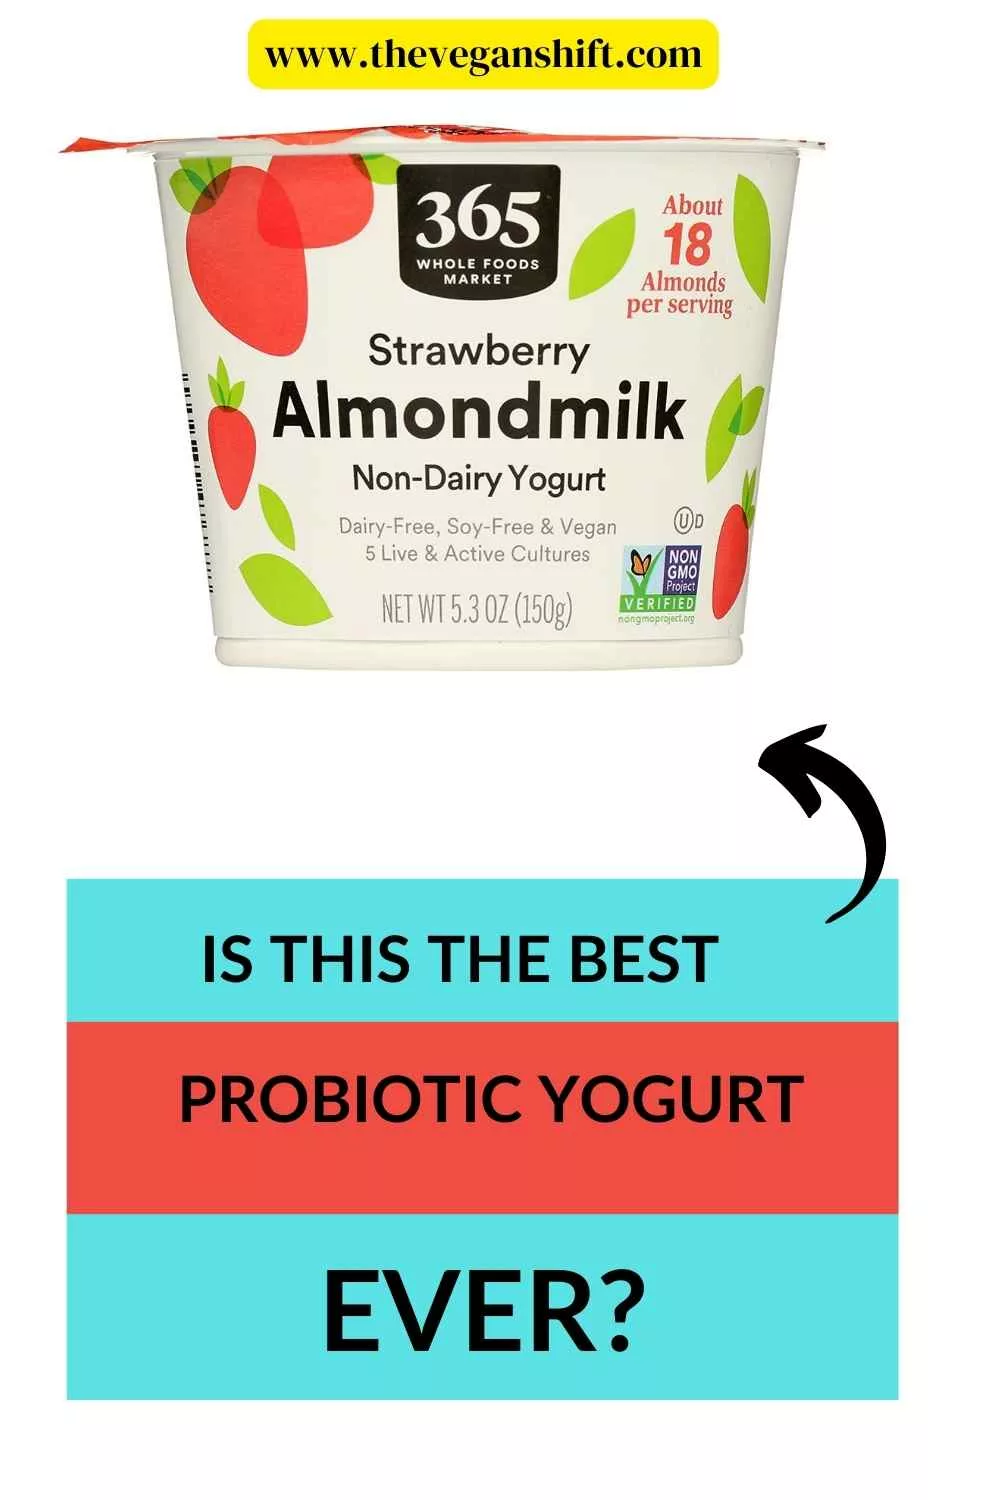 is this the best probiotic yogurt ever?